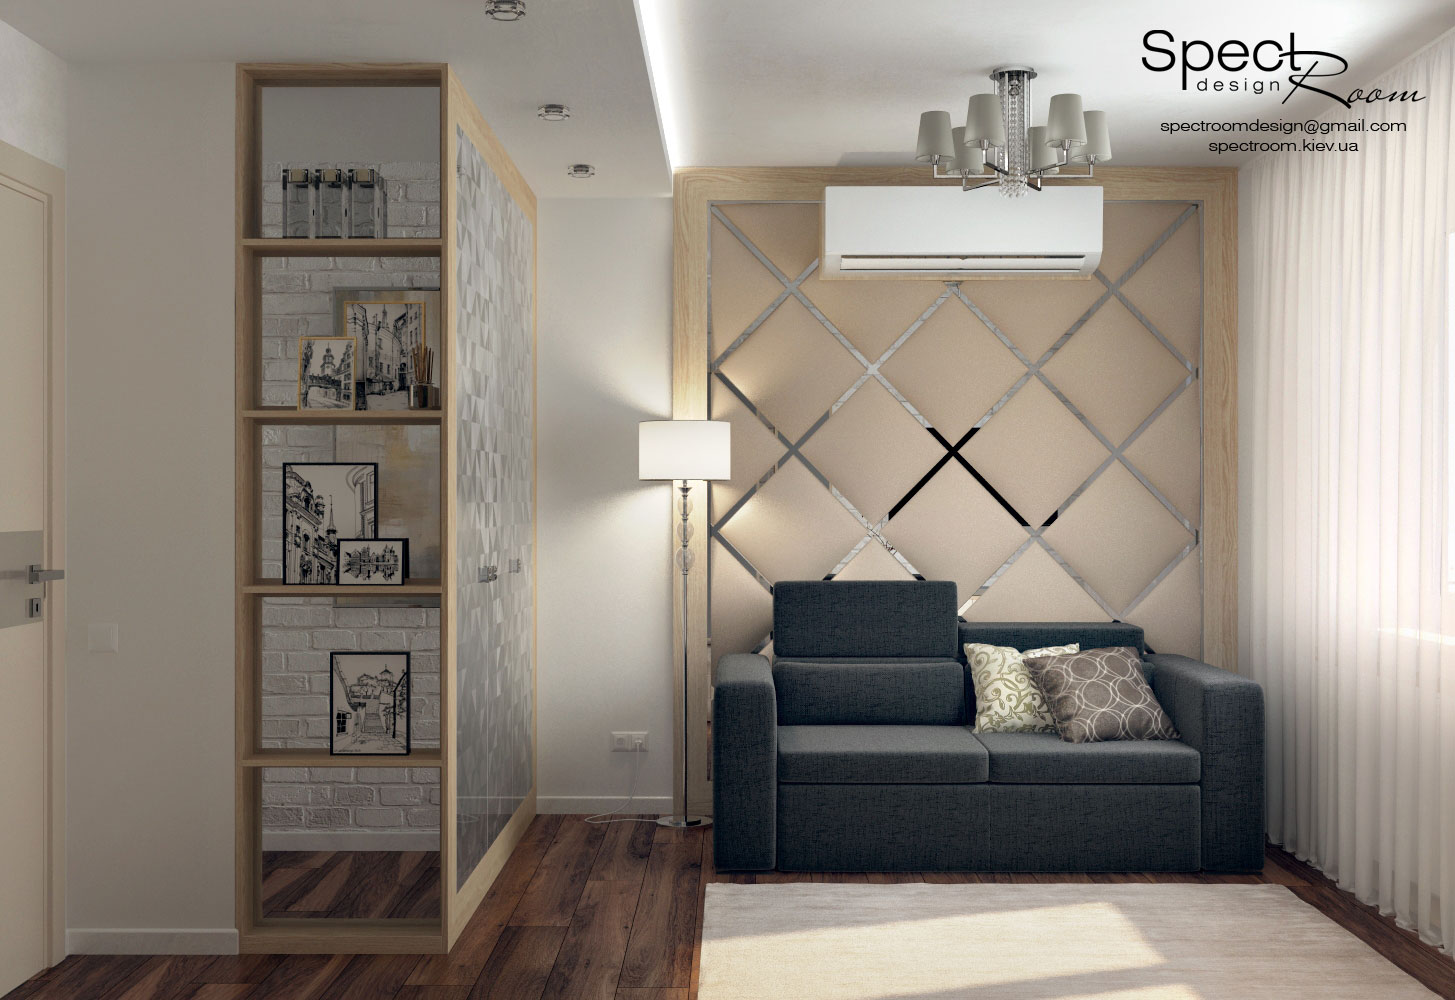 Дизайн інтер'єру чотирикімнатної квартири  - Spectroom